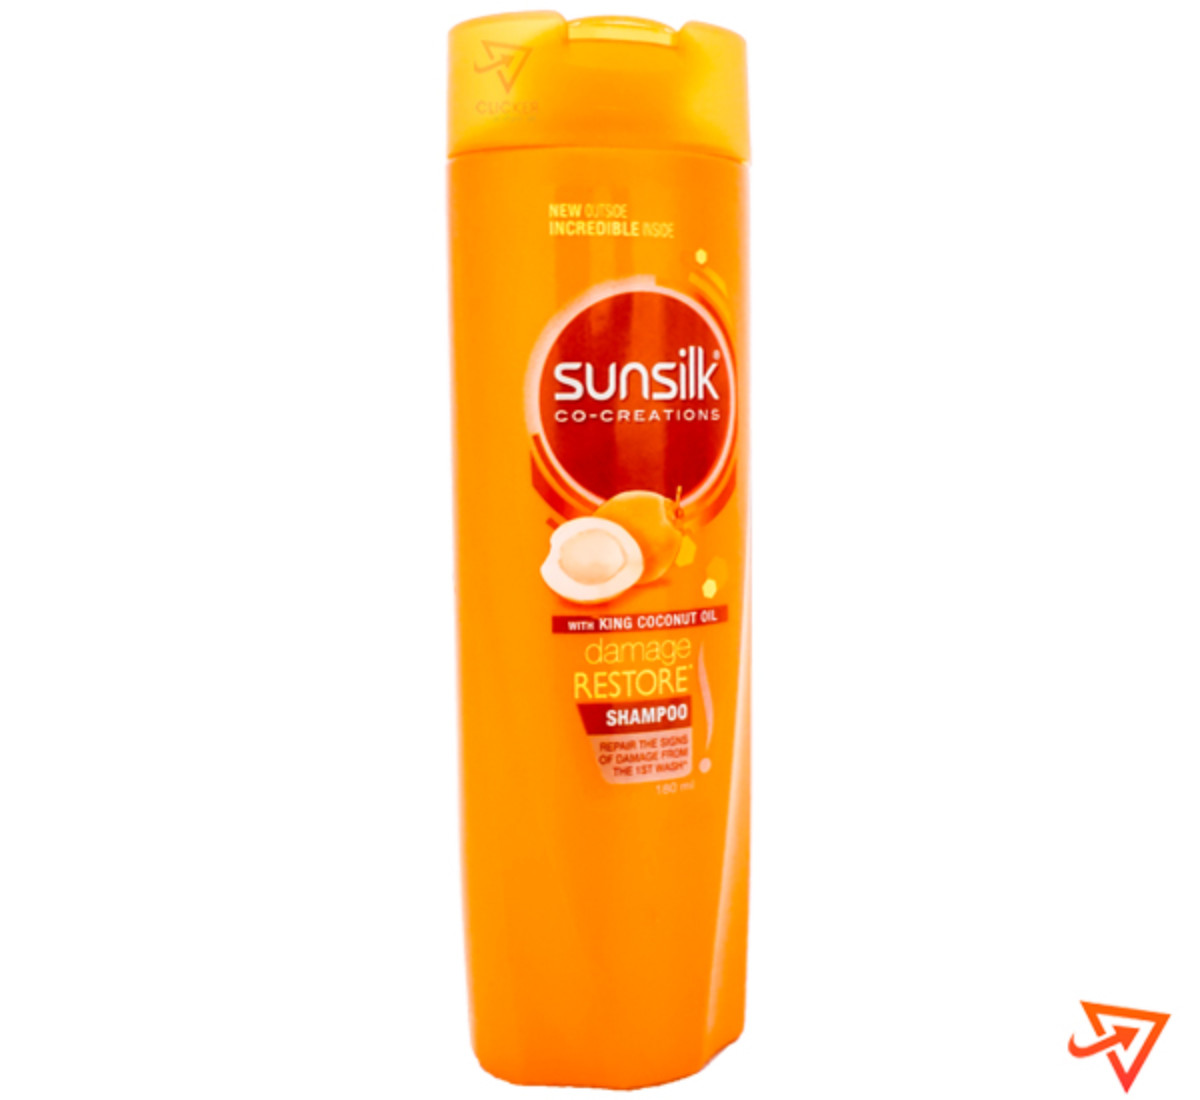 Clicker product 180ml SUNSILK damage restore shampoo 1112